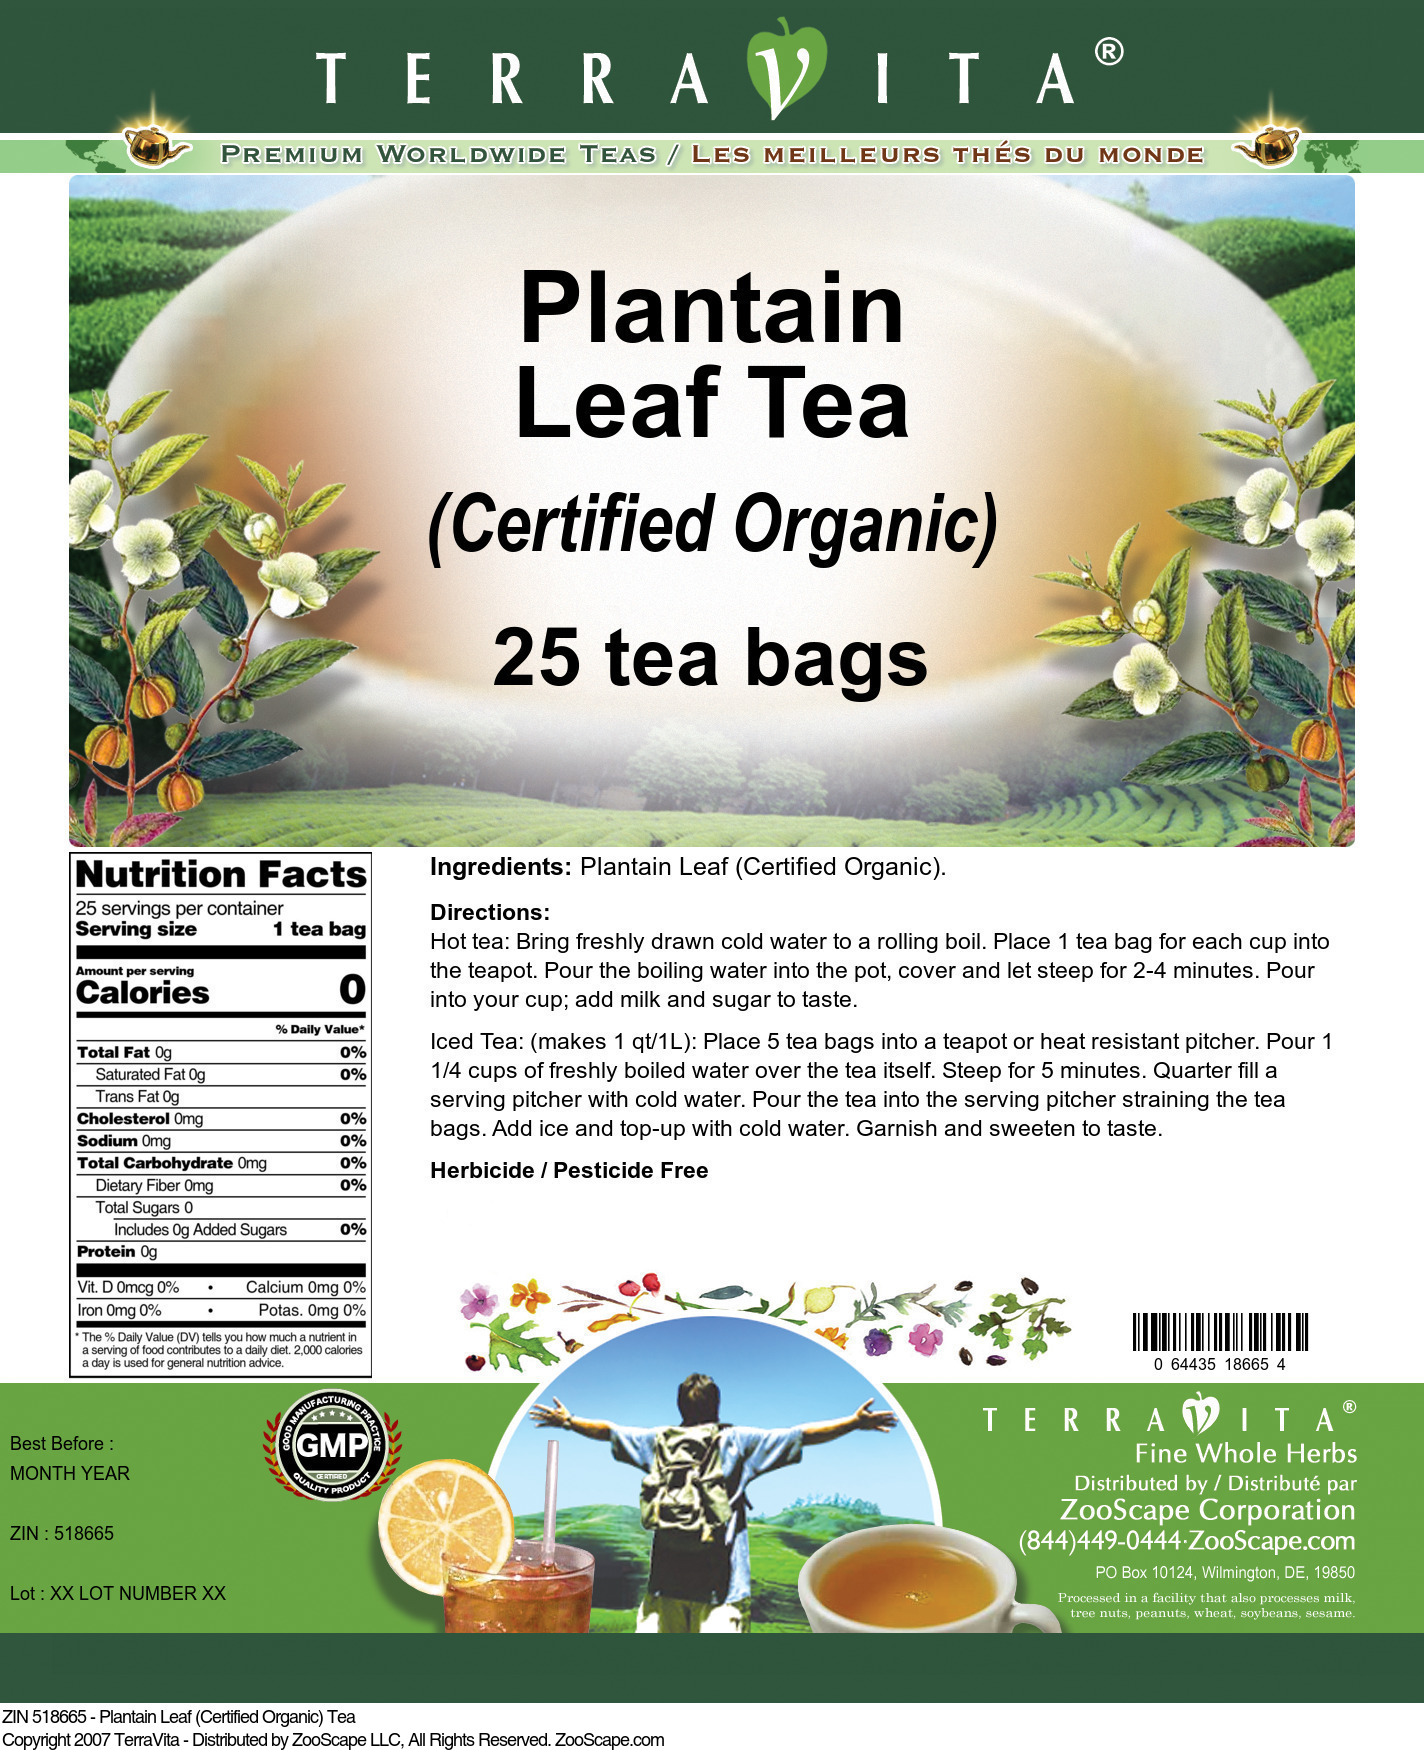 Plantain Leaf (Certified Organic) Tea - Label